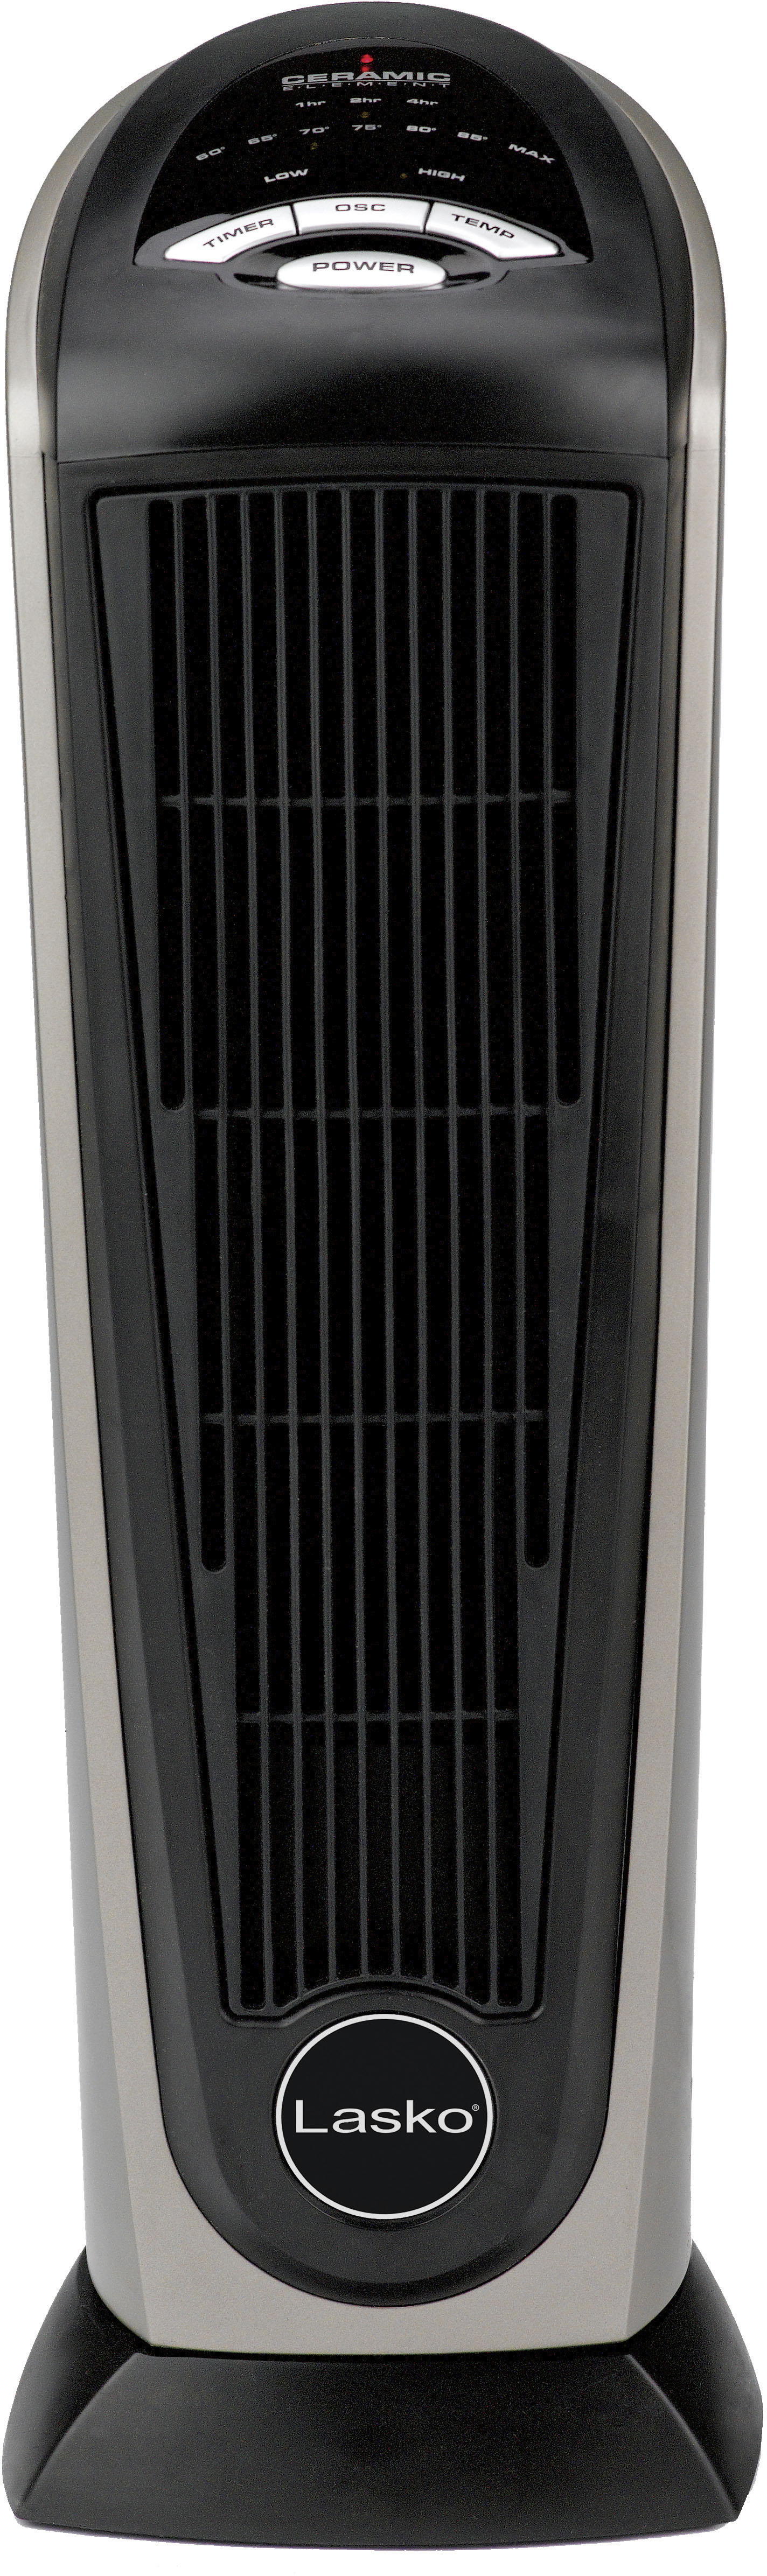 Lasko - Ceramic Tower Space Heater with Remote Control - Black/Silver